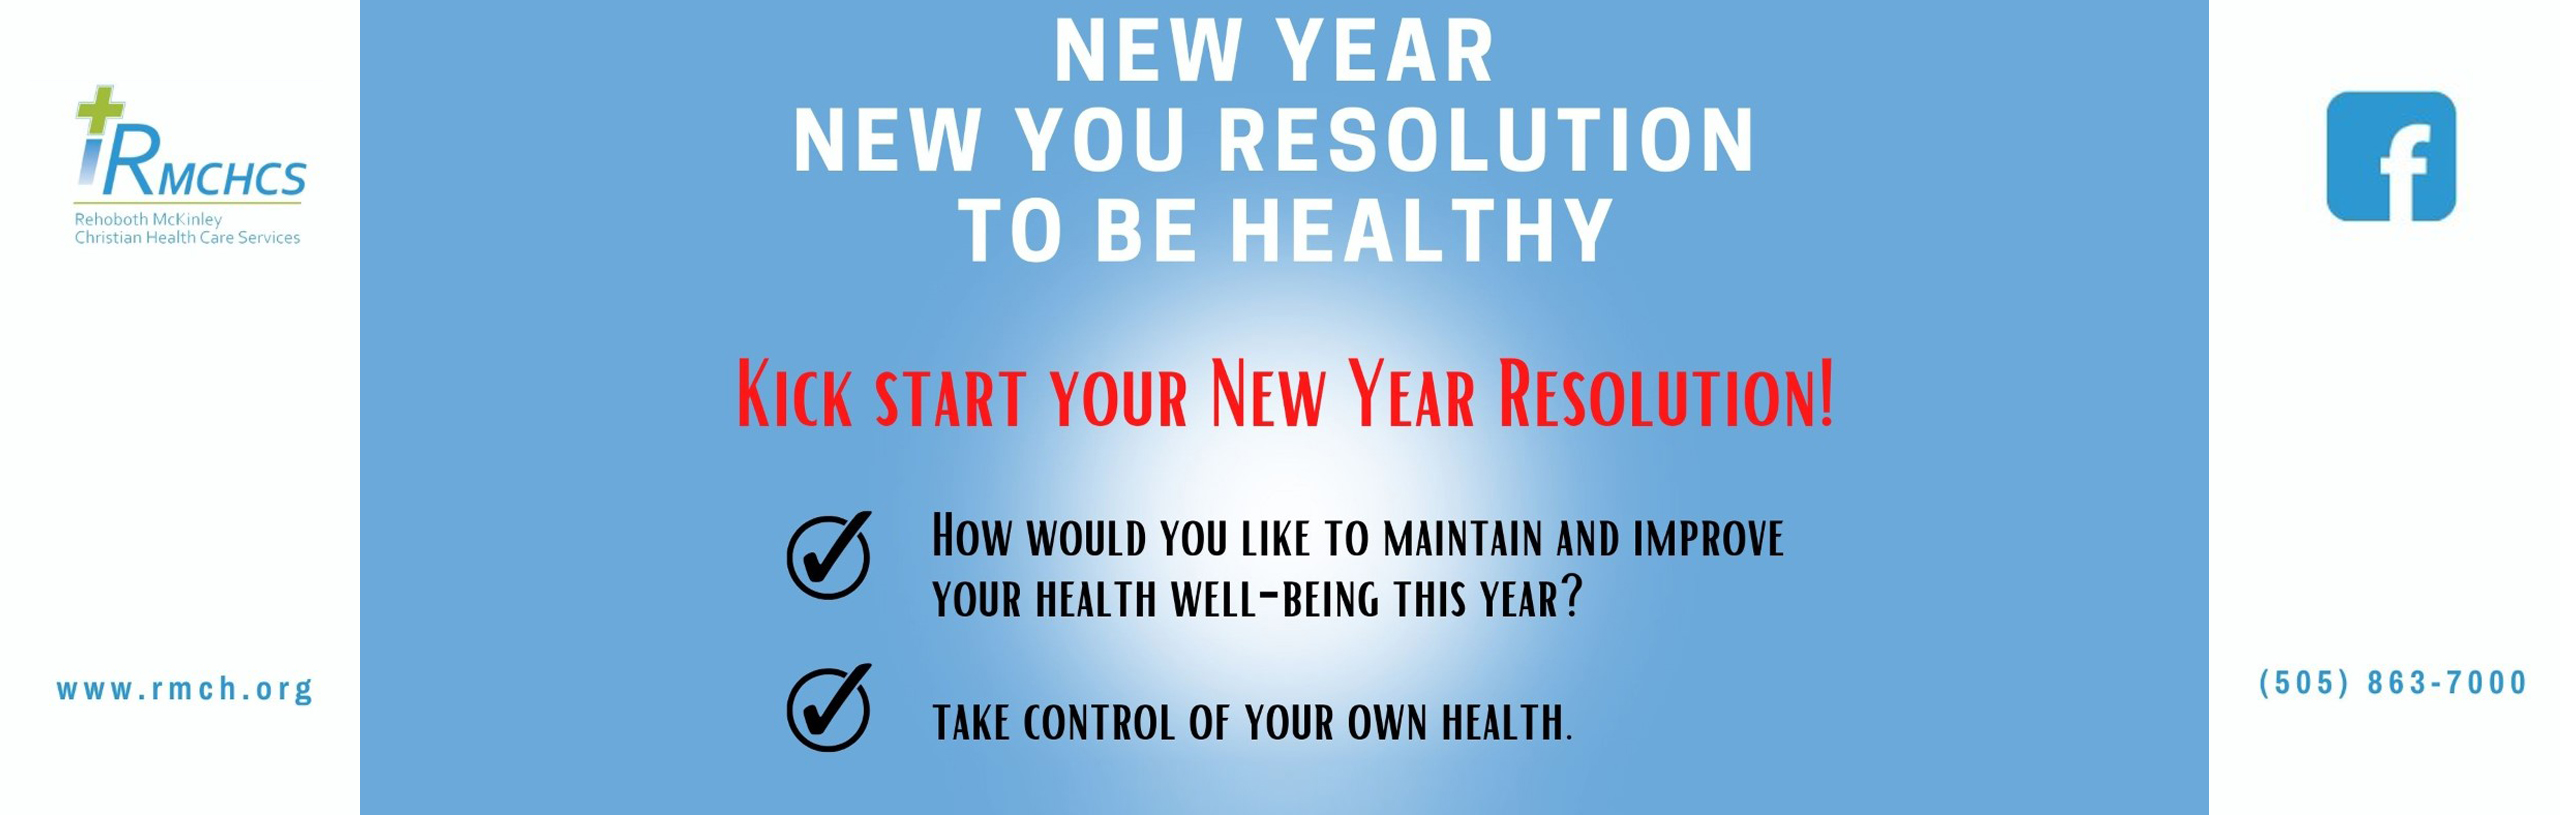 New years resolution kickstart!